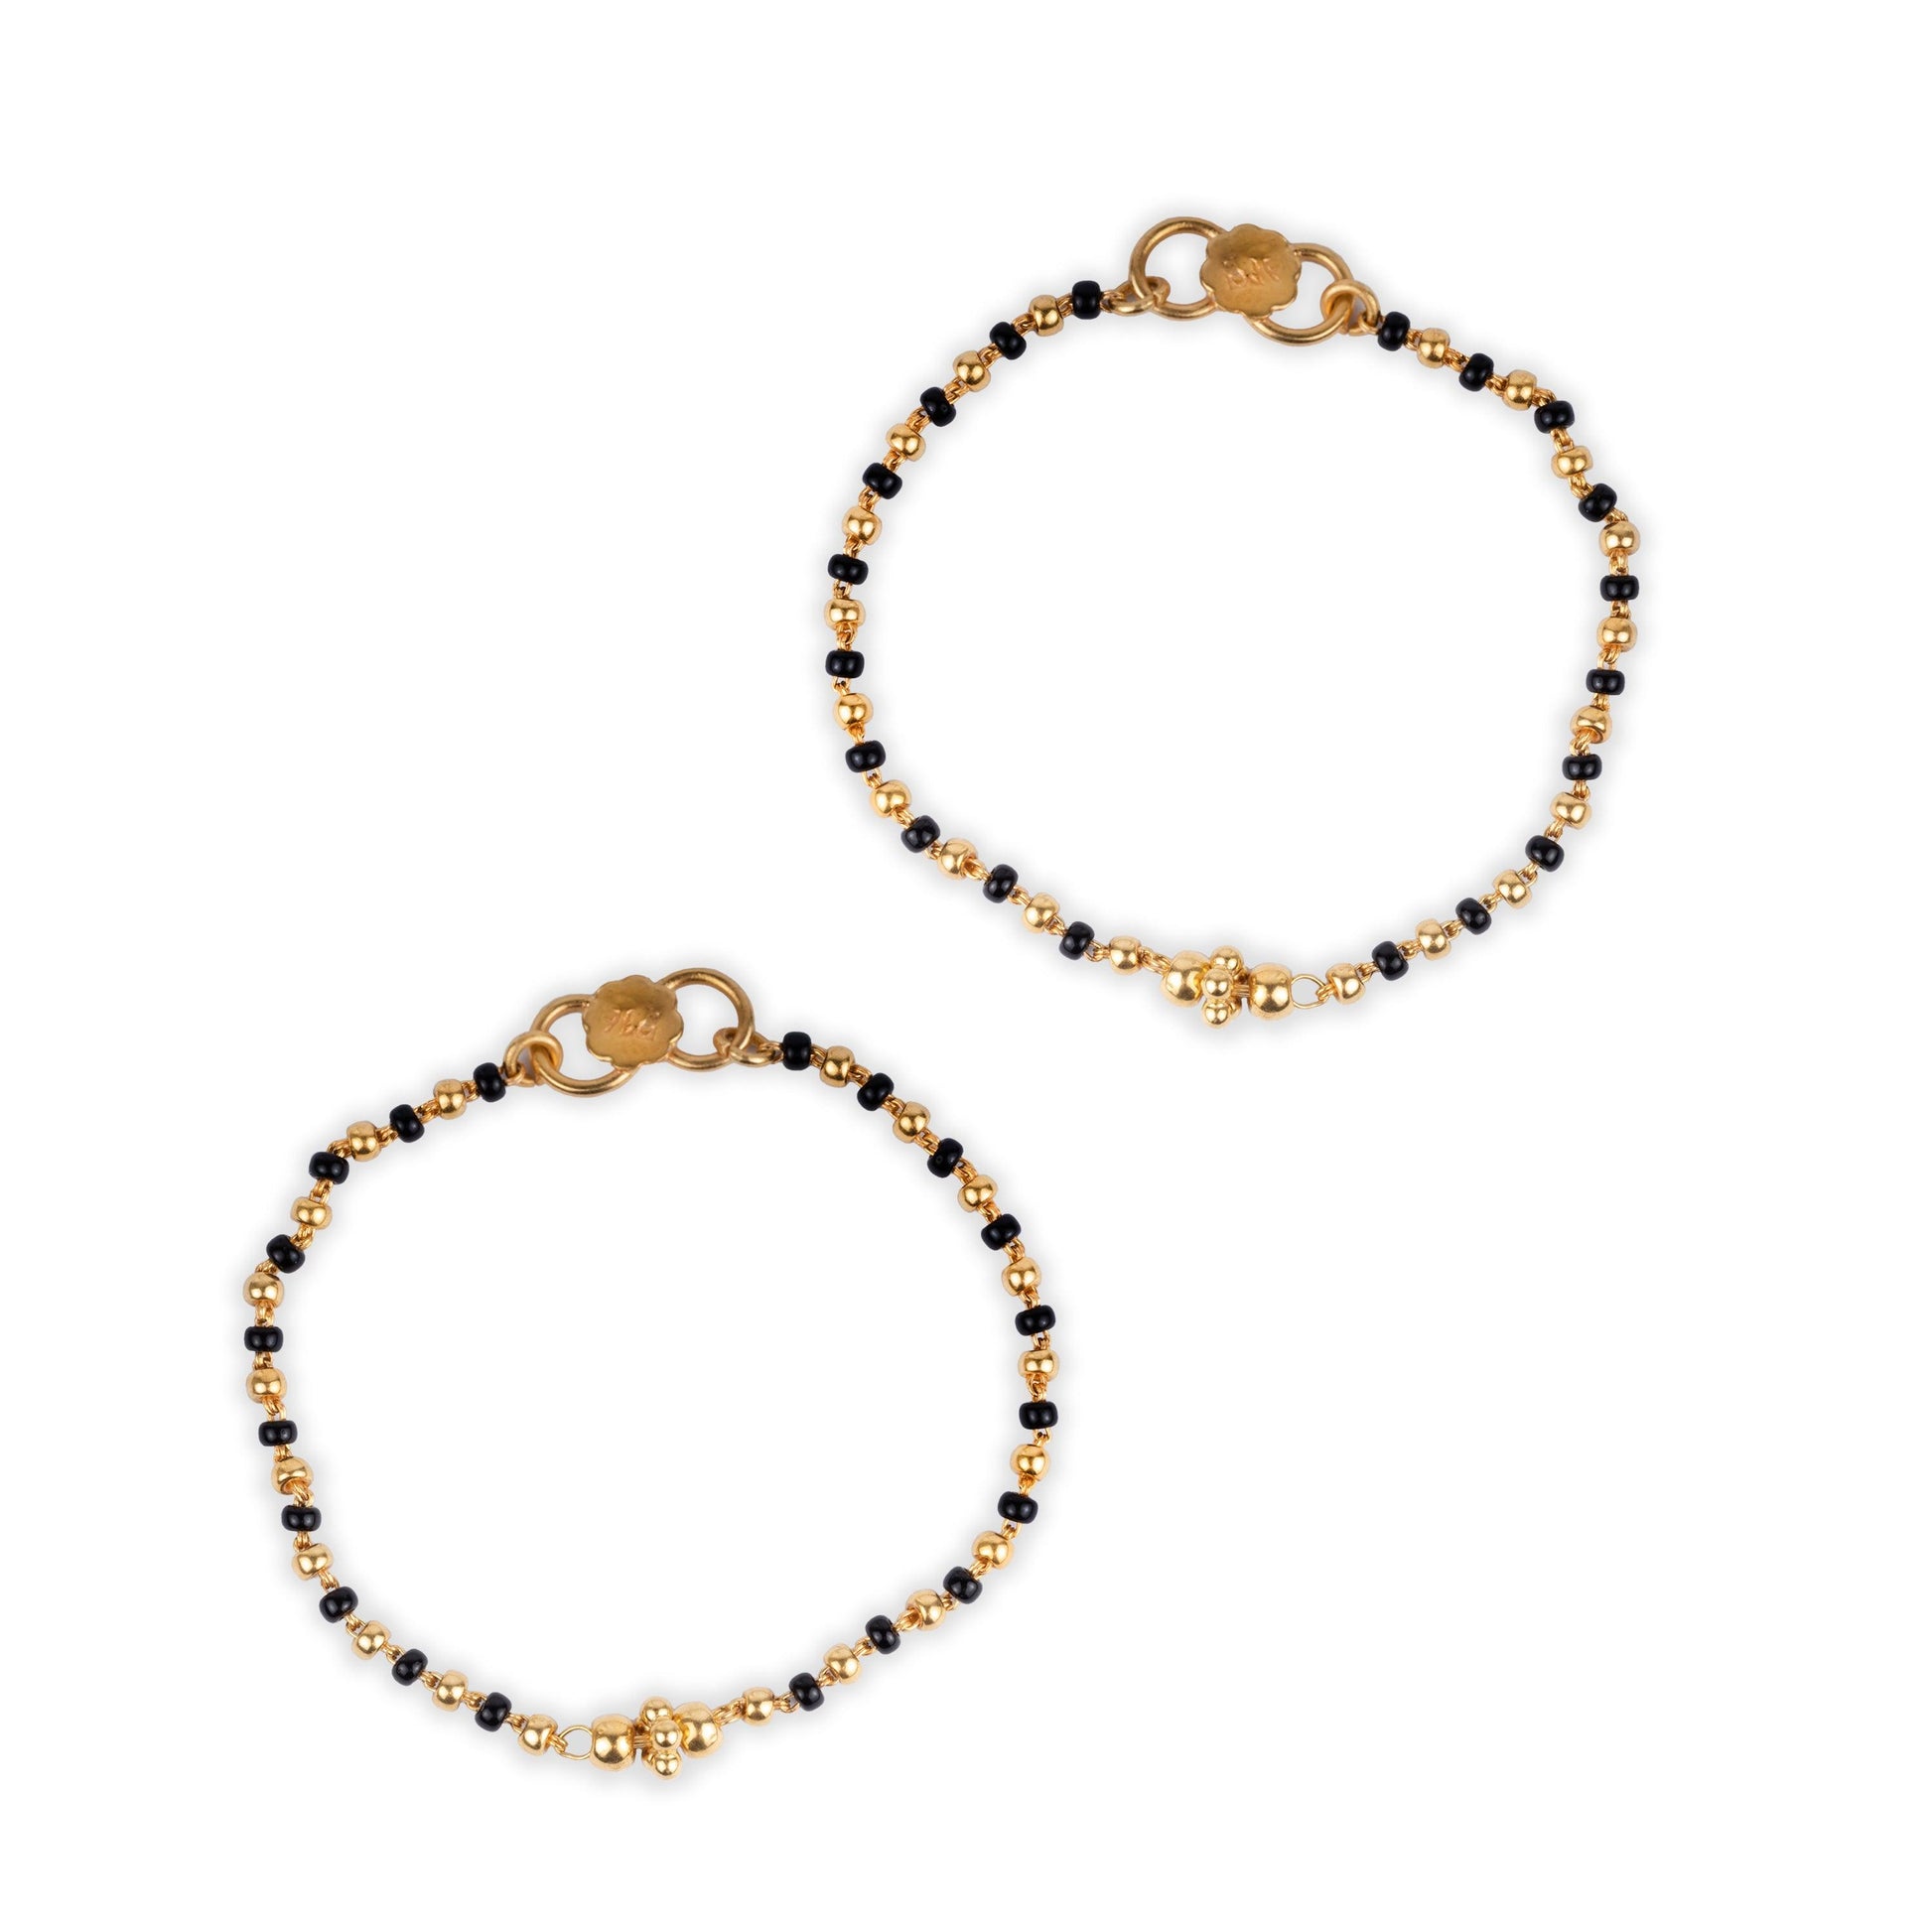 22ct Gold Children's Bracelets with Black Beads CBR-7834 - Minar Jewellers